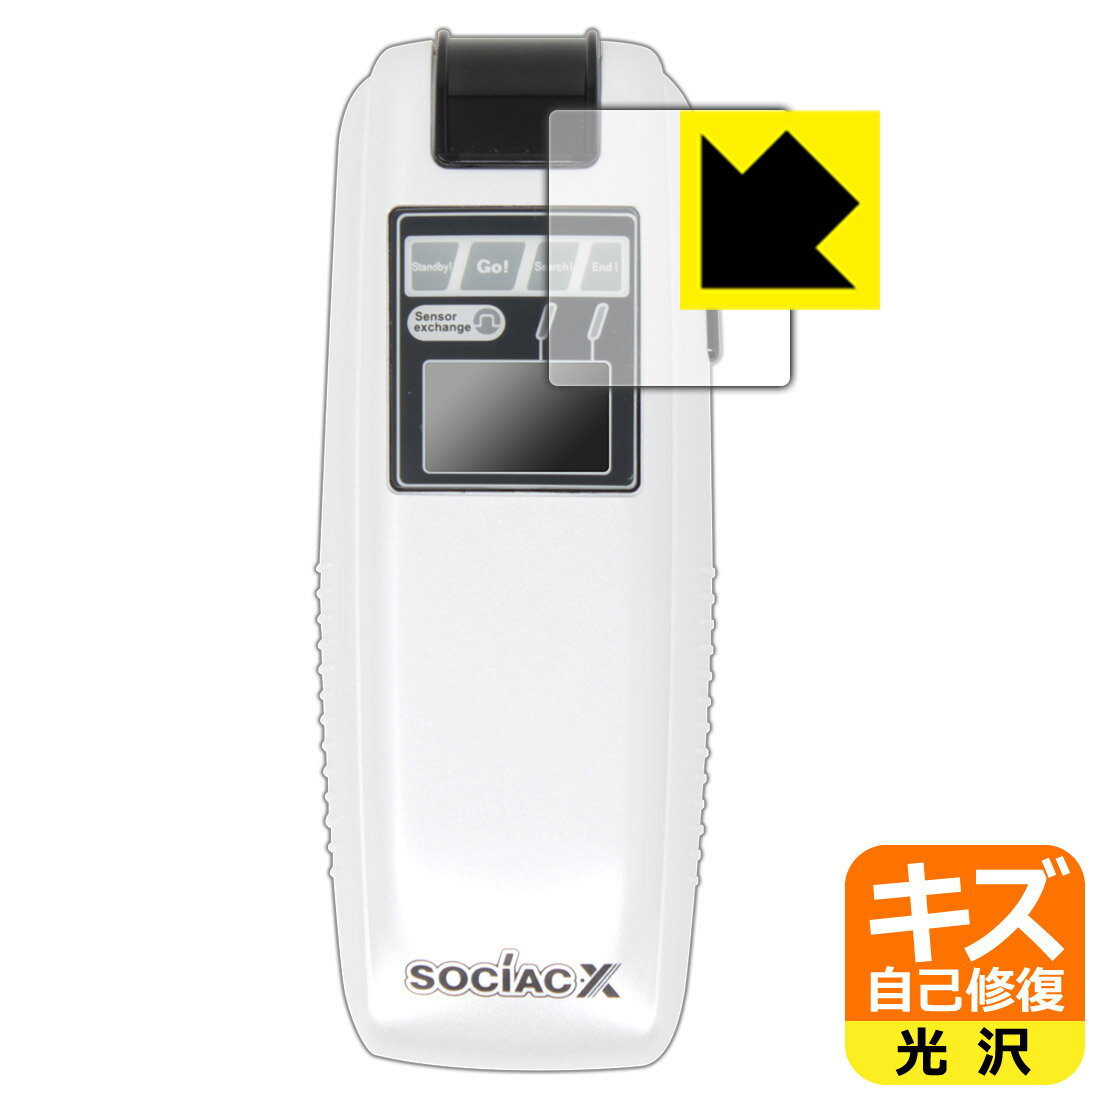 SOCIAC(ソシアック) SC-103 / SOCIAC X(ソシアック・エックス) SC-202 用 キズ自己修復保護フィルム 日本製 自社製造直販